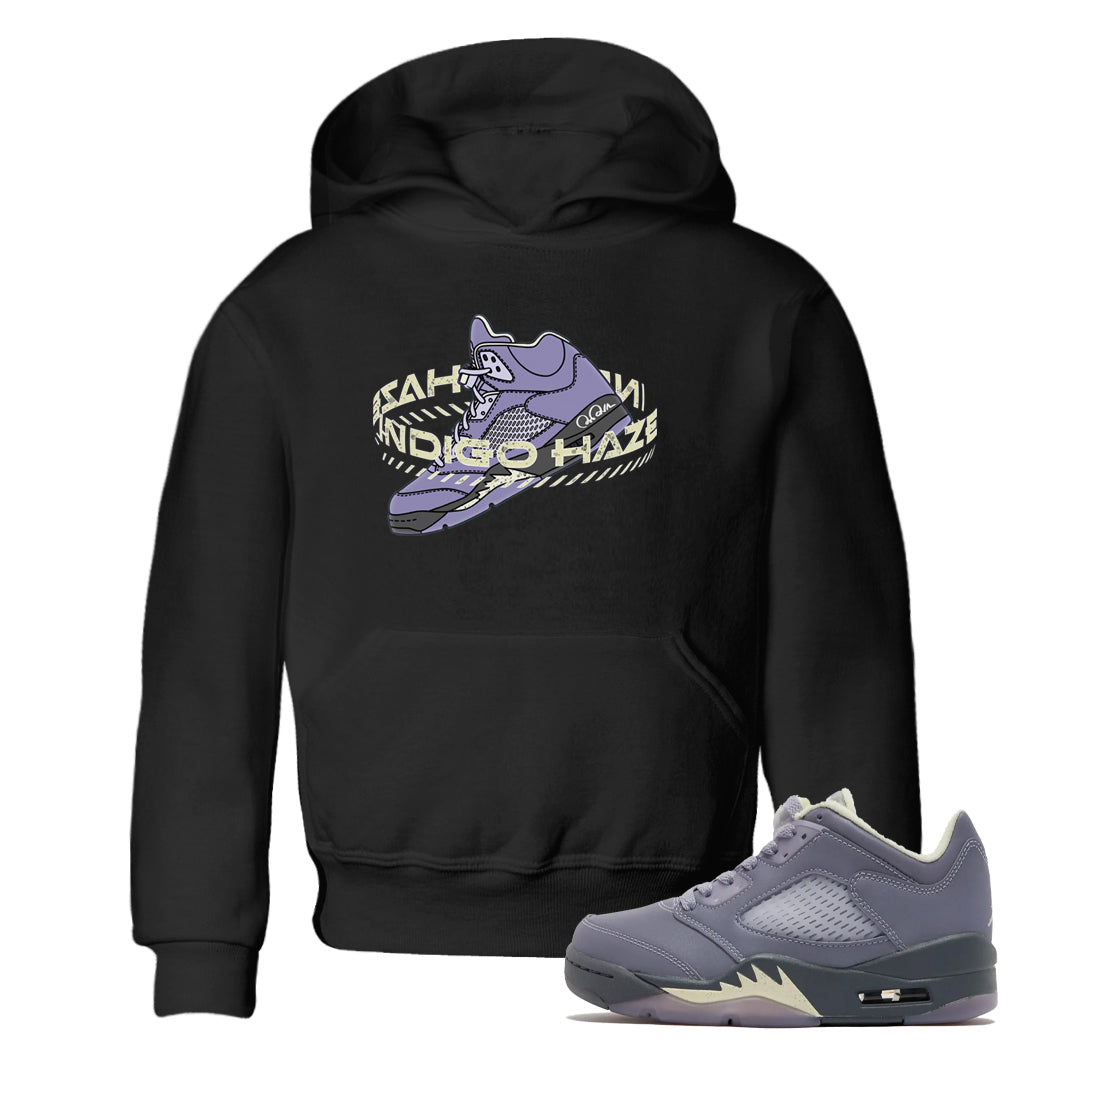 Air Jordan 5 Indigo Haze Sneaker Match Tees Warping Space Sneaker Tees AJ5 Indigo Haze Sneaker Release Tees Kids Shirts Black 1